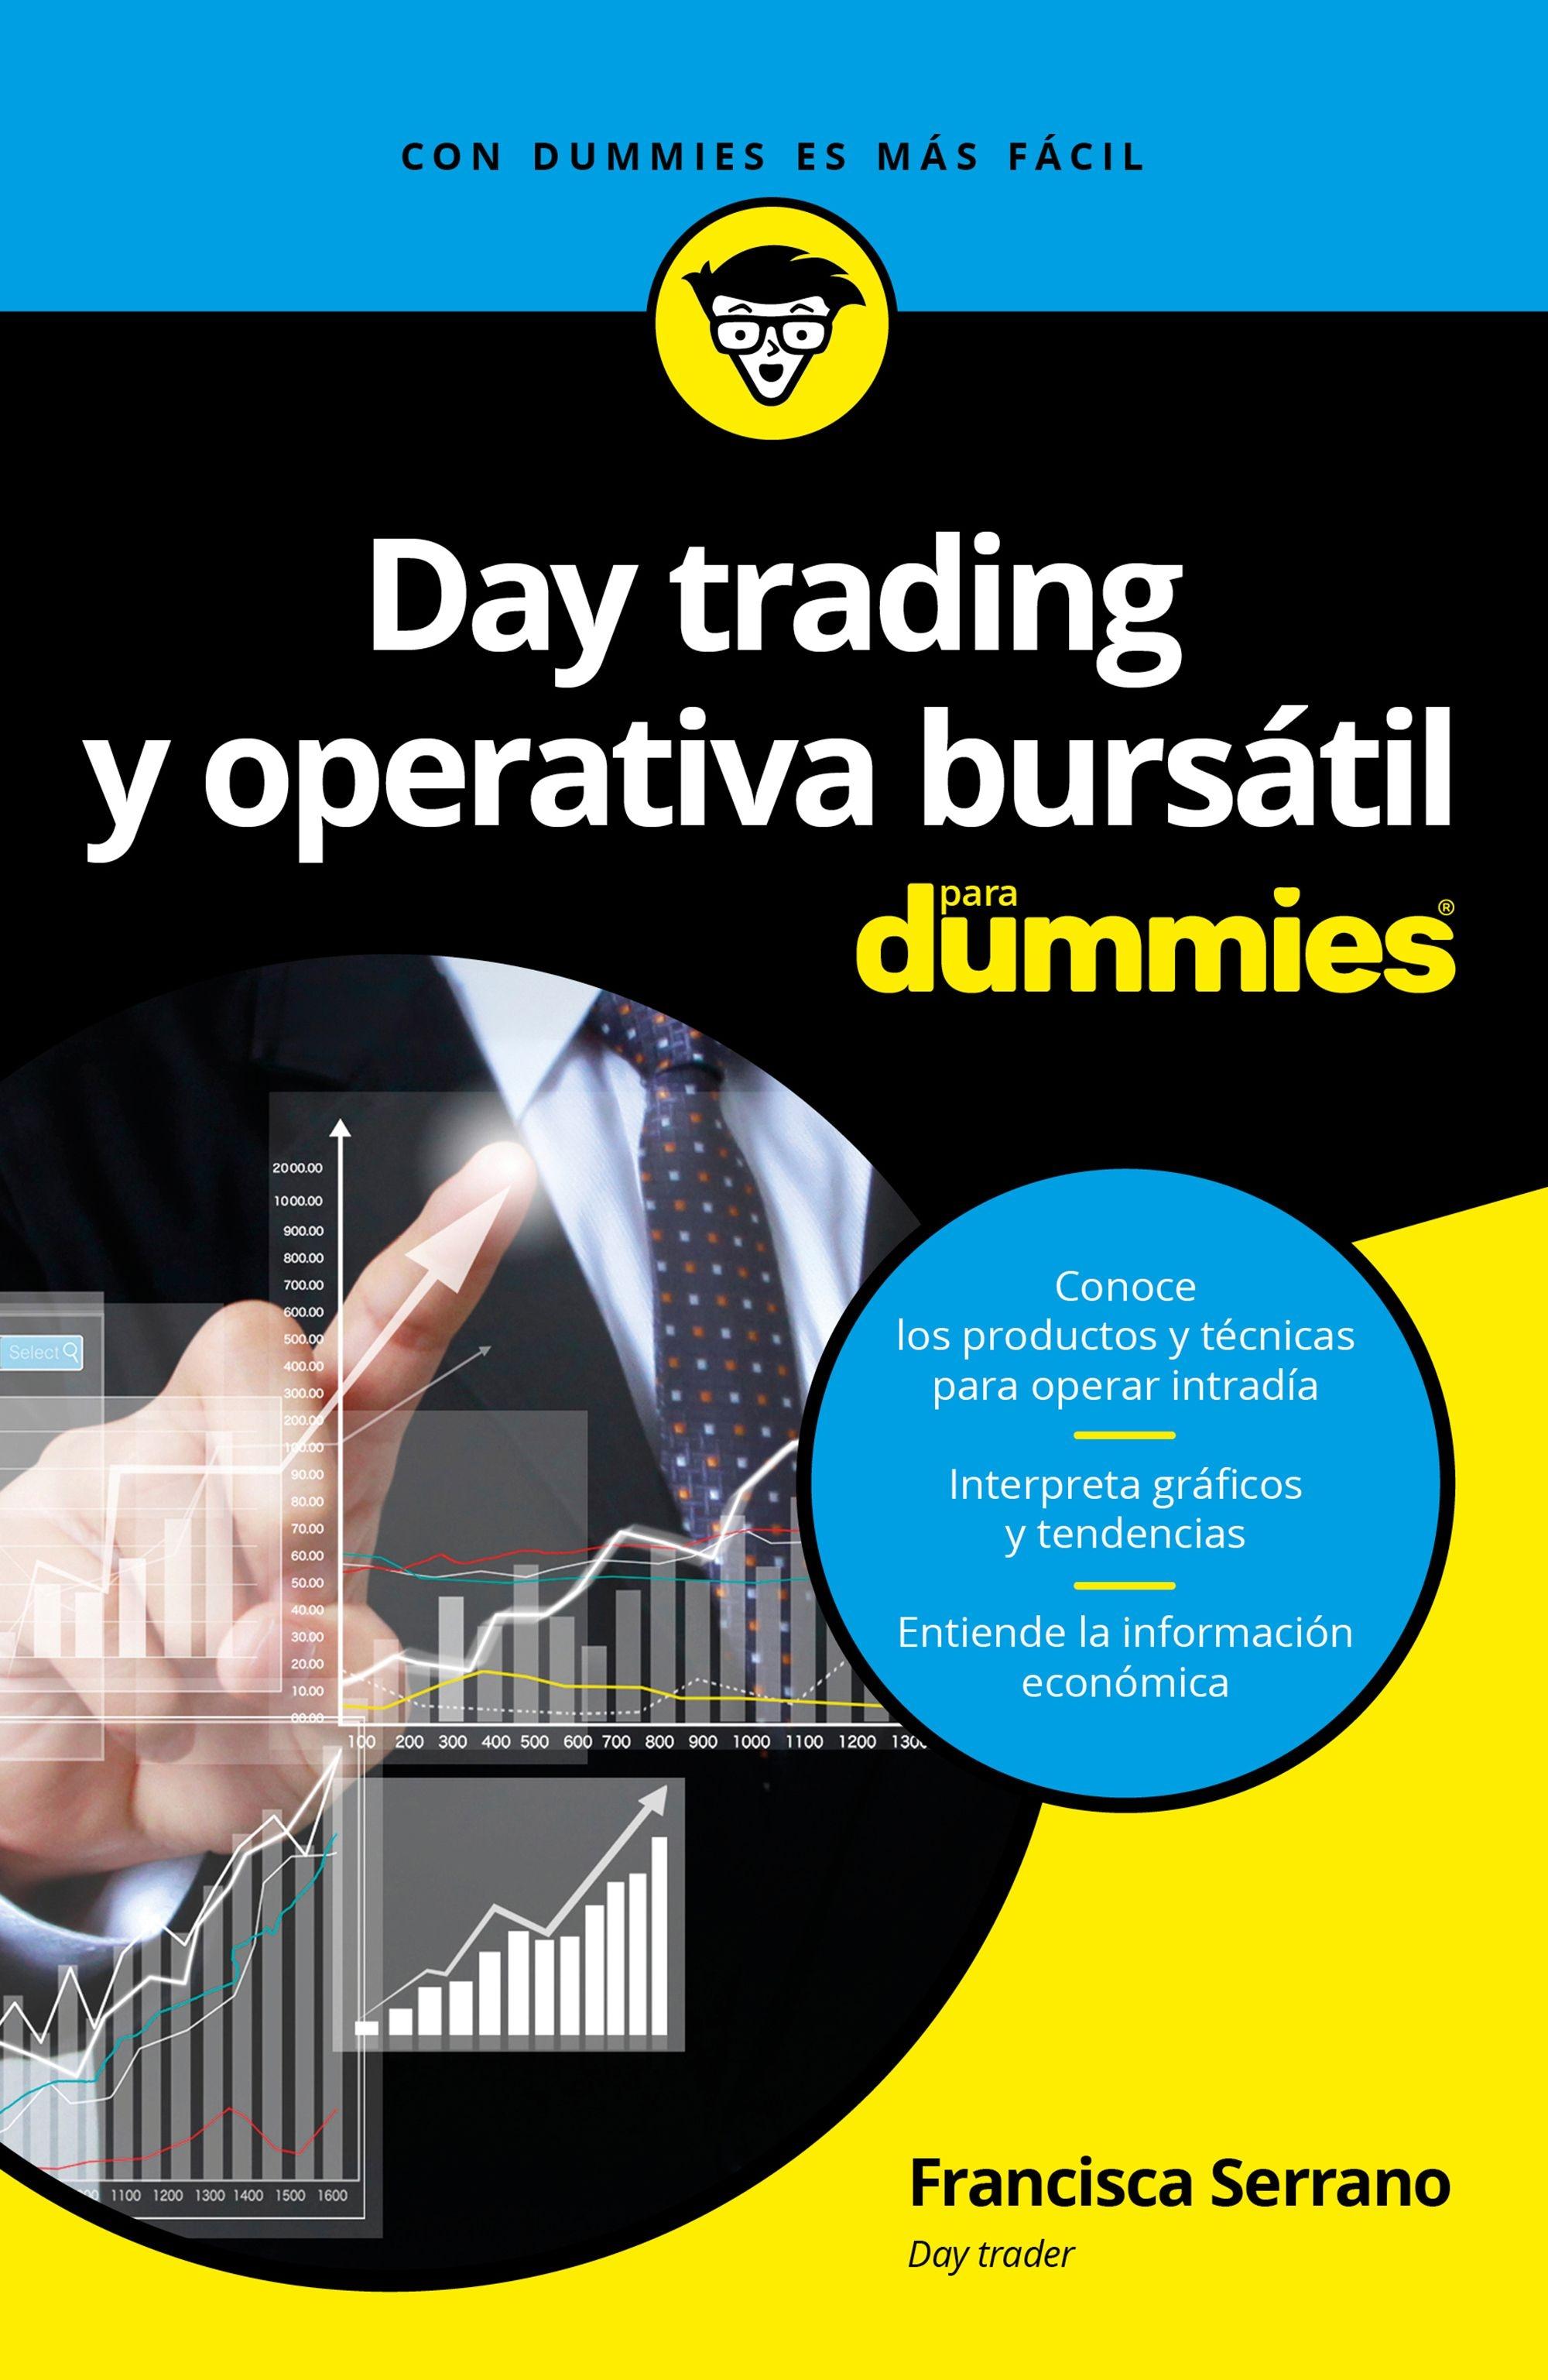 Day trading y operativa bursátil para Dummies